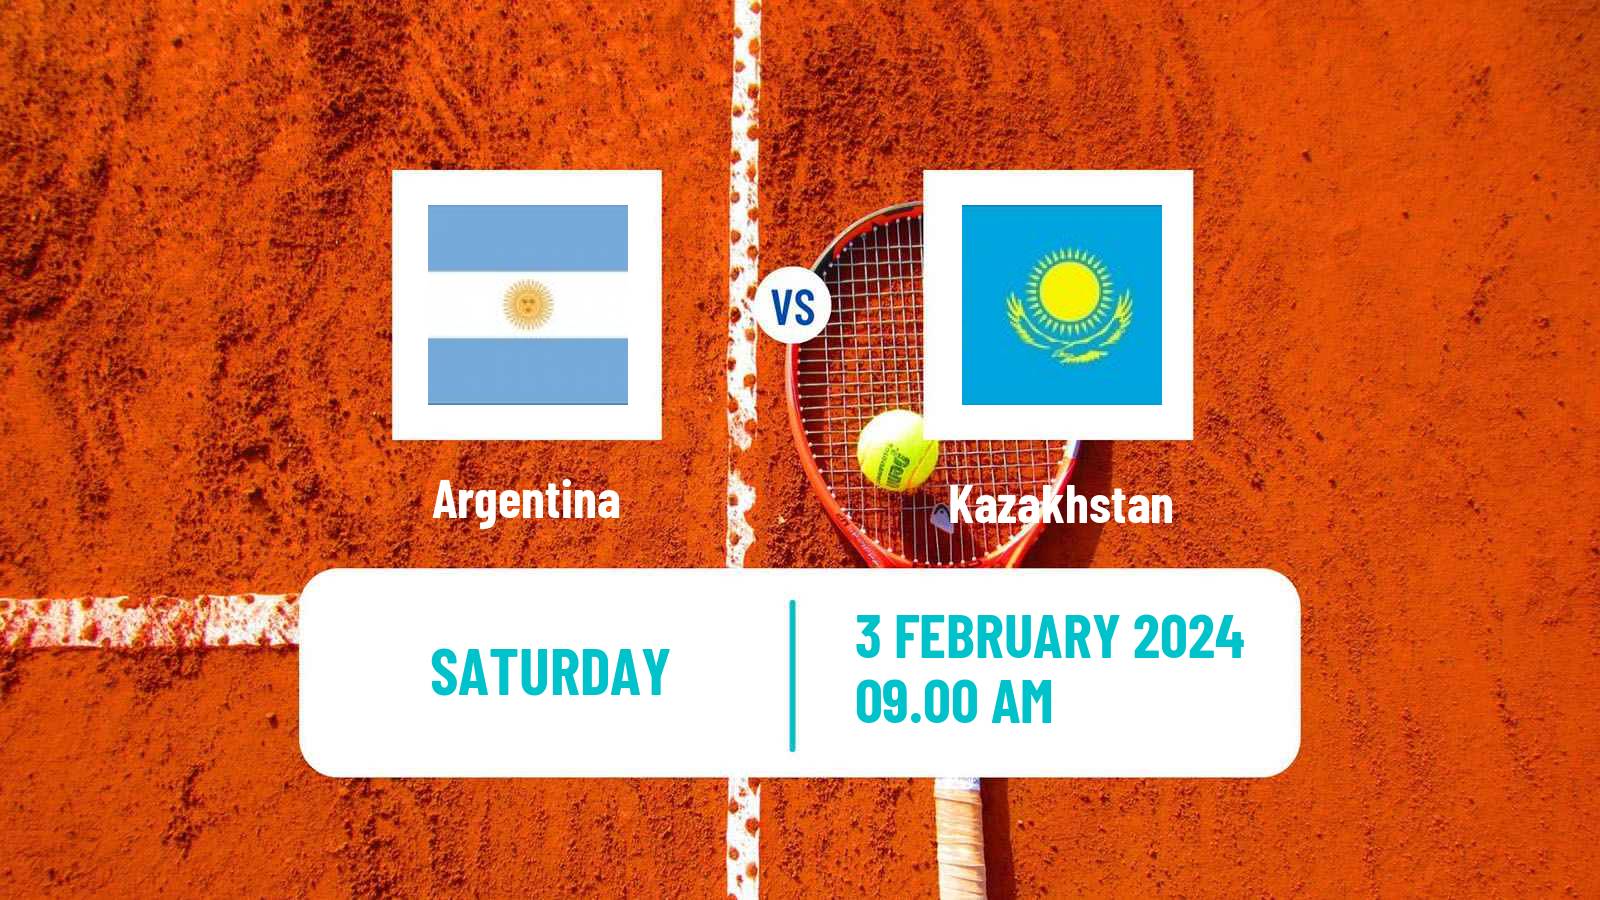 Tennis Davis Cup - World Group Teams Argentina - Kazakhstan